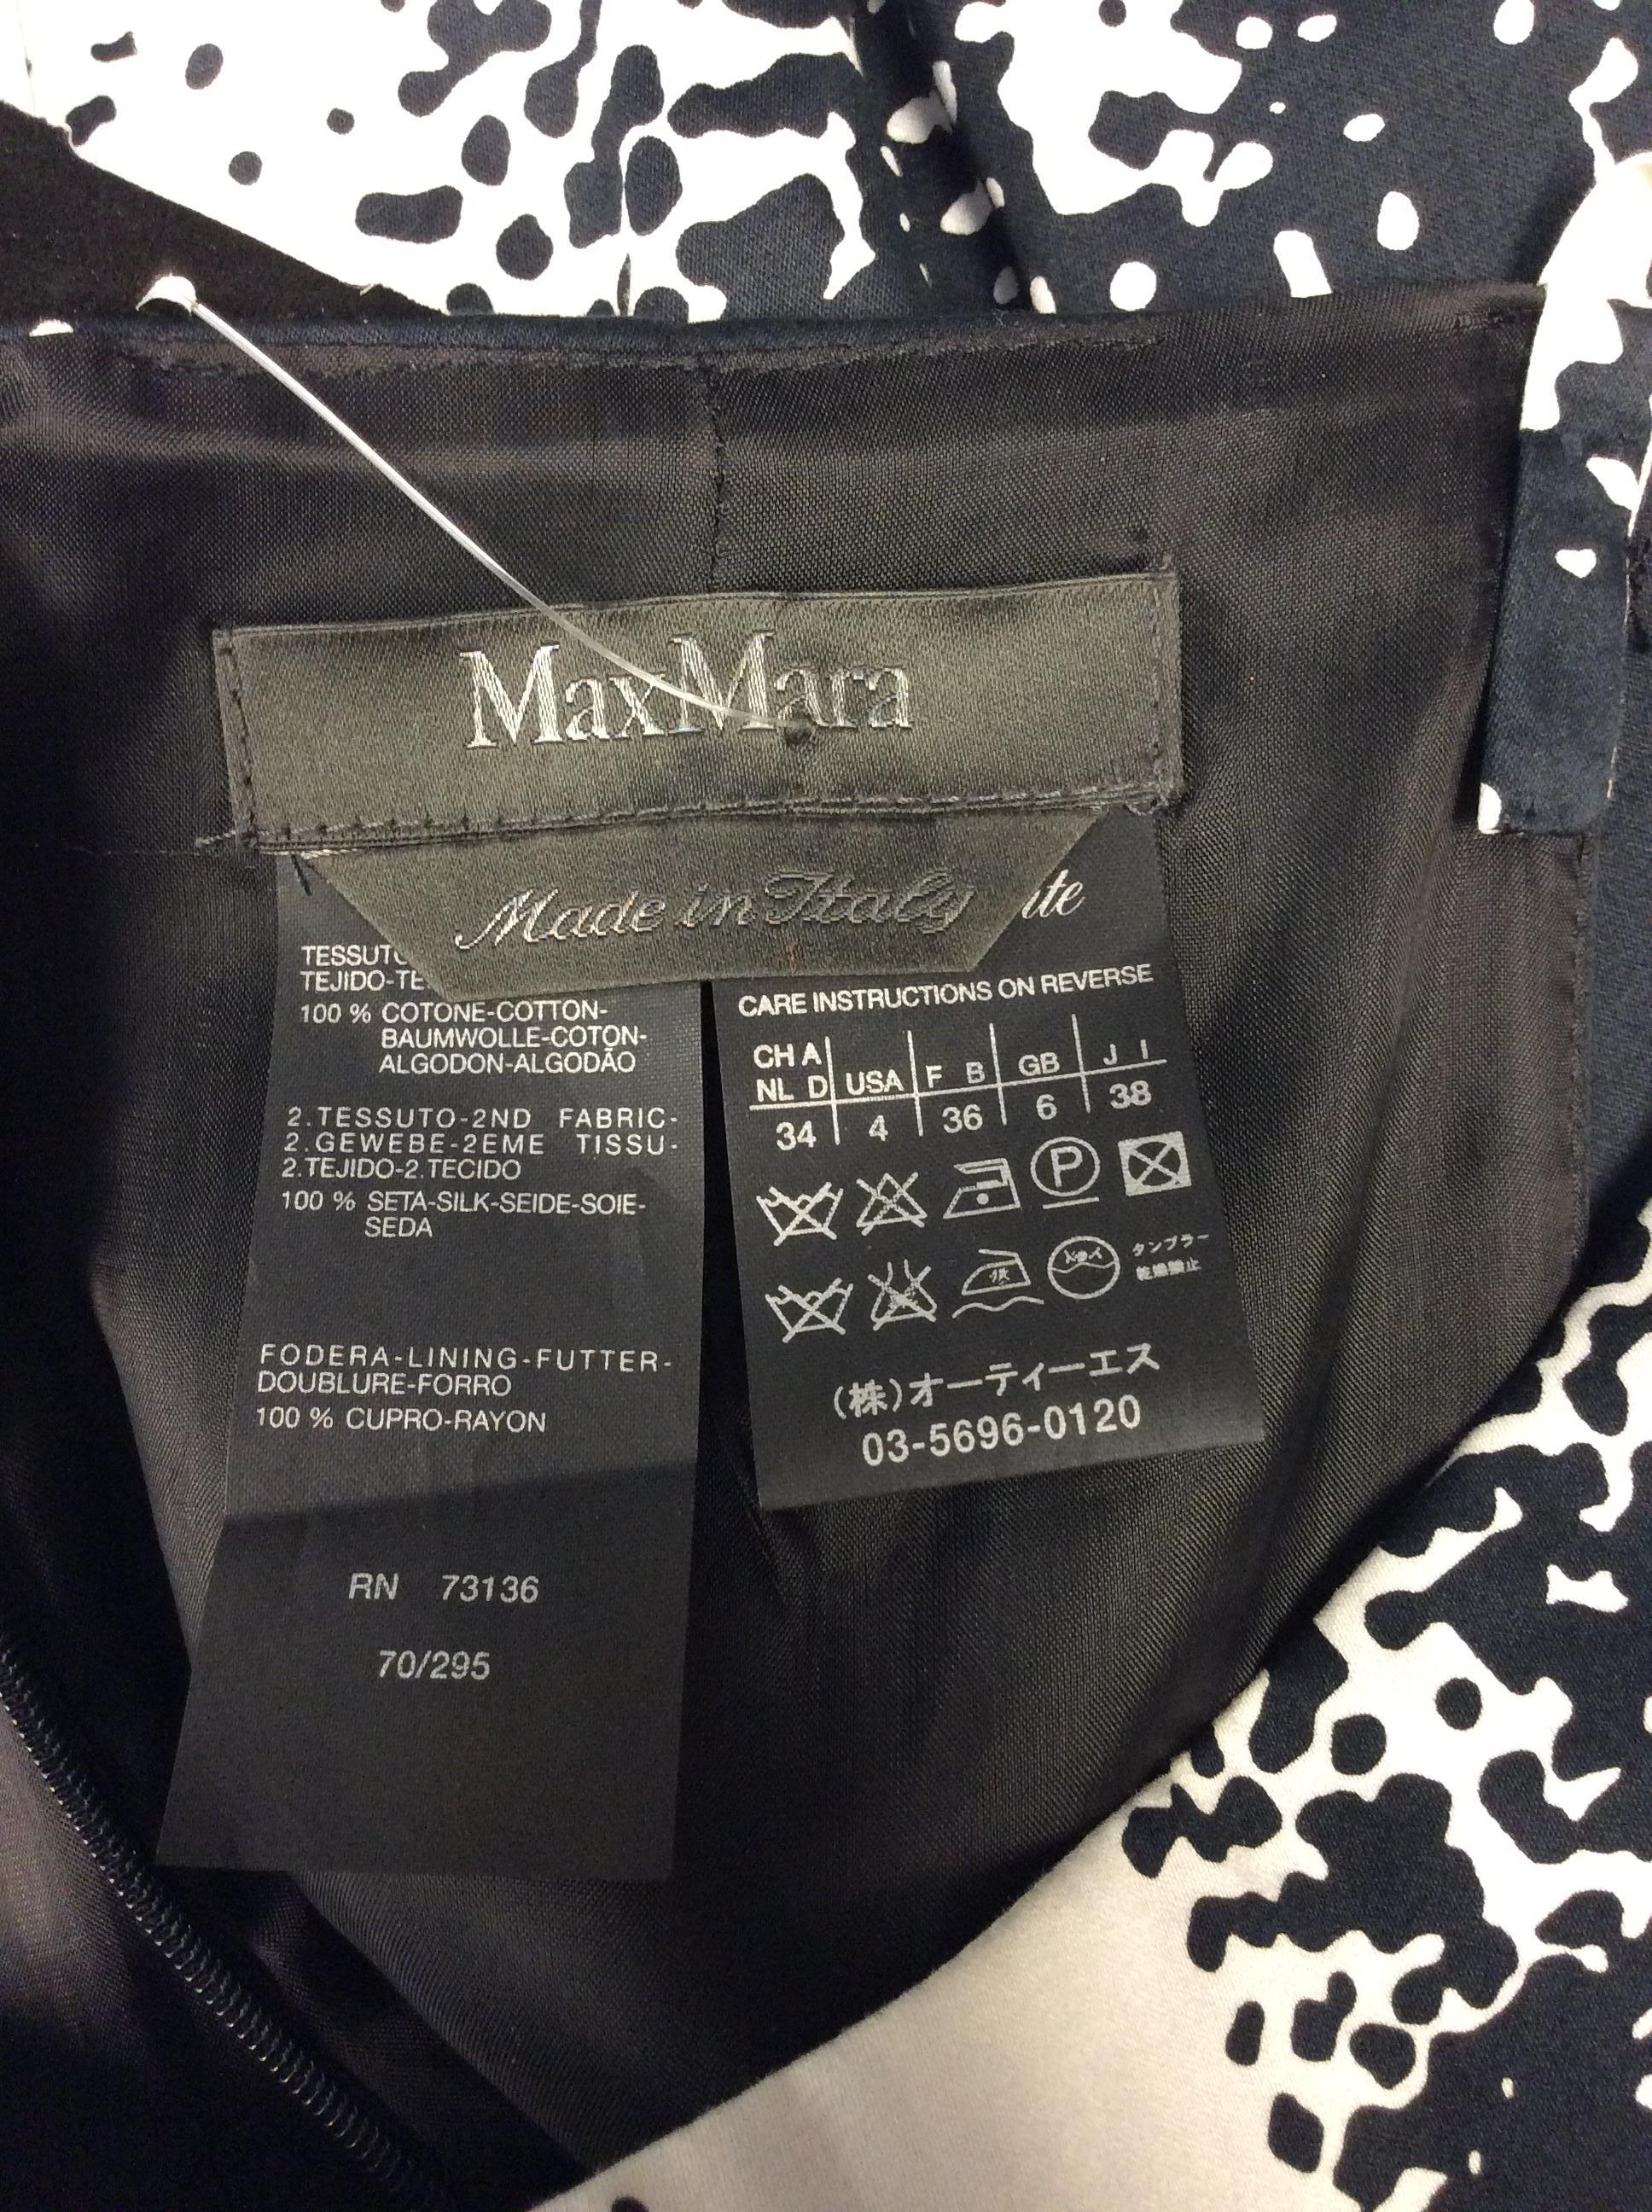 Max Mara Black and White Print Dress For Sale 3